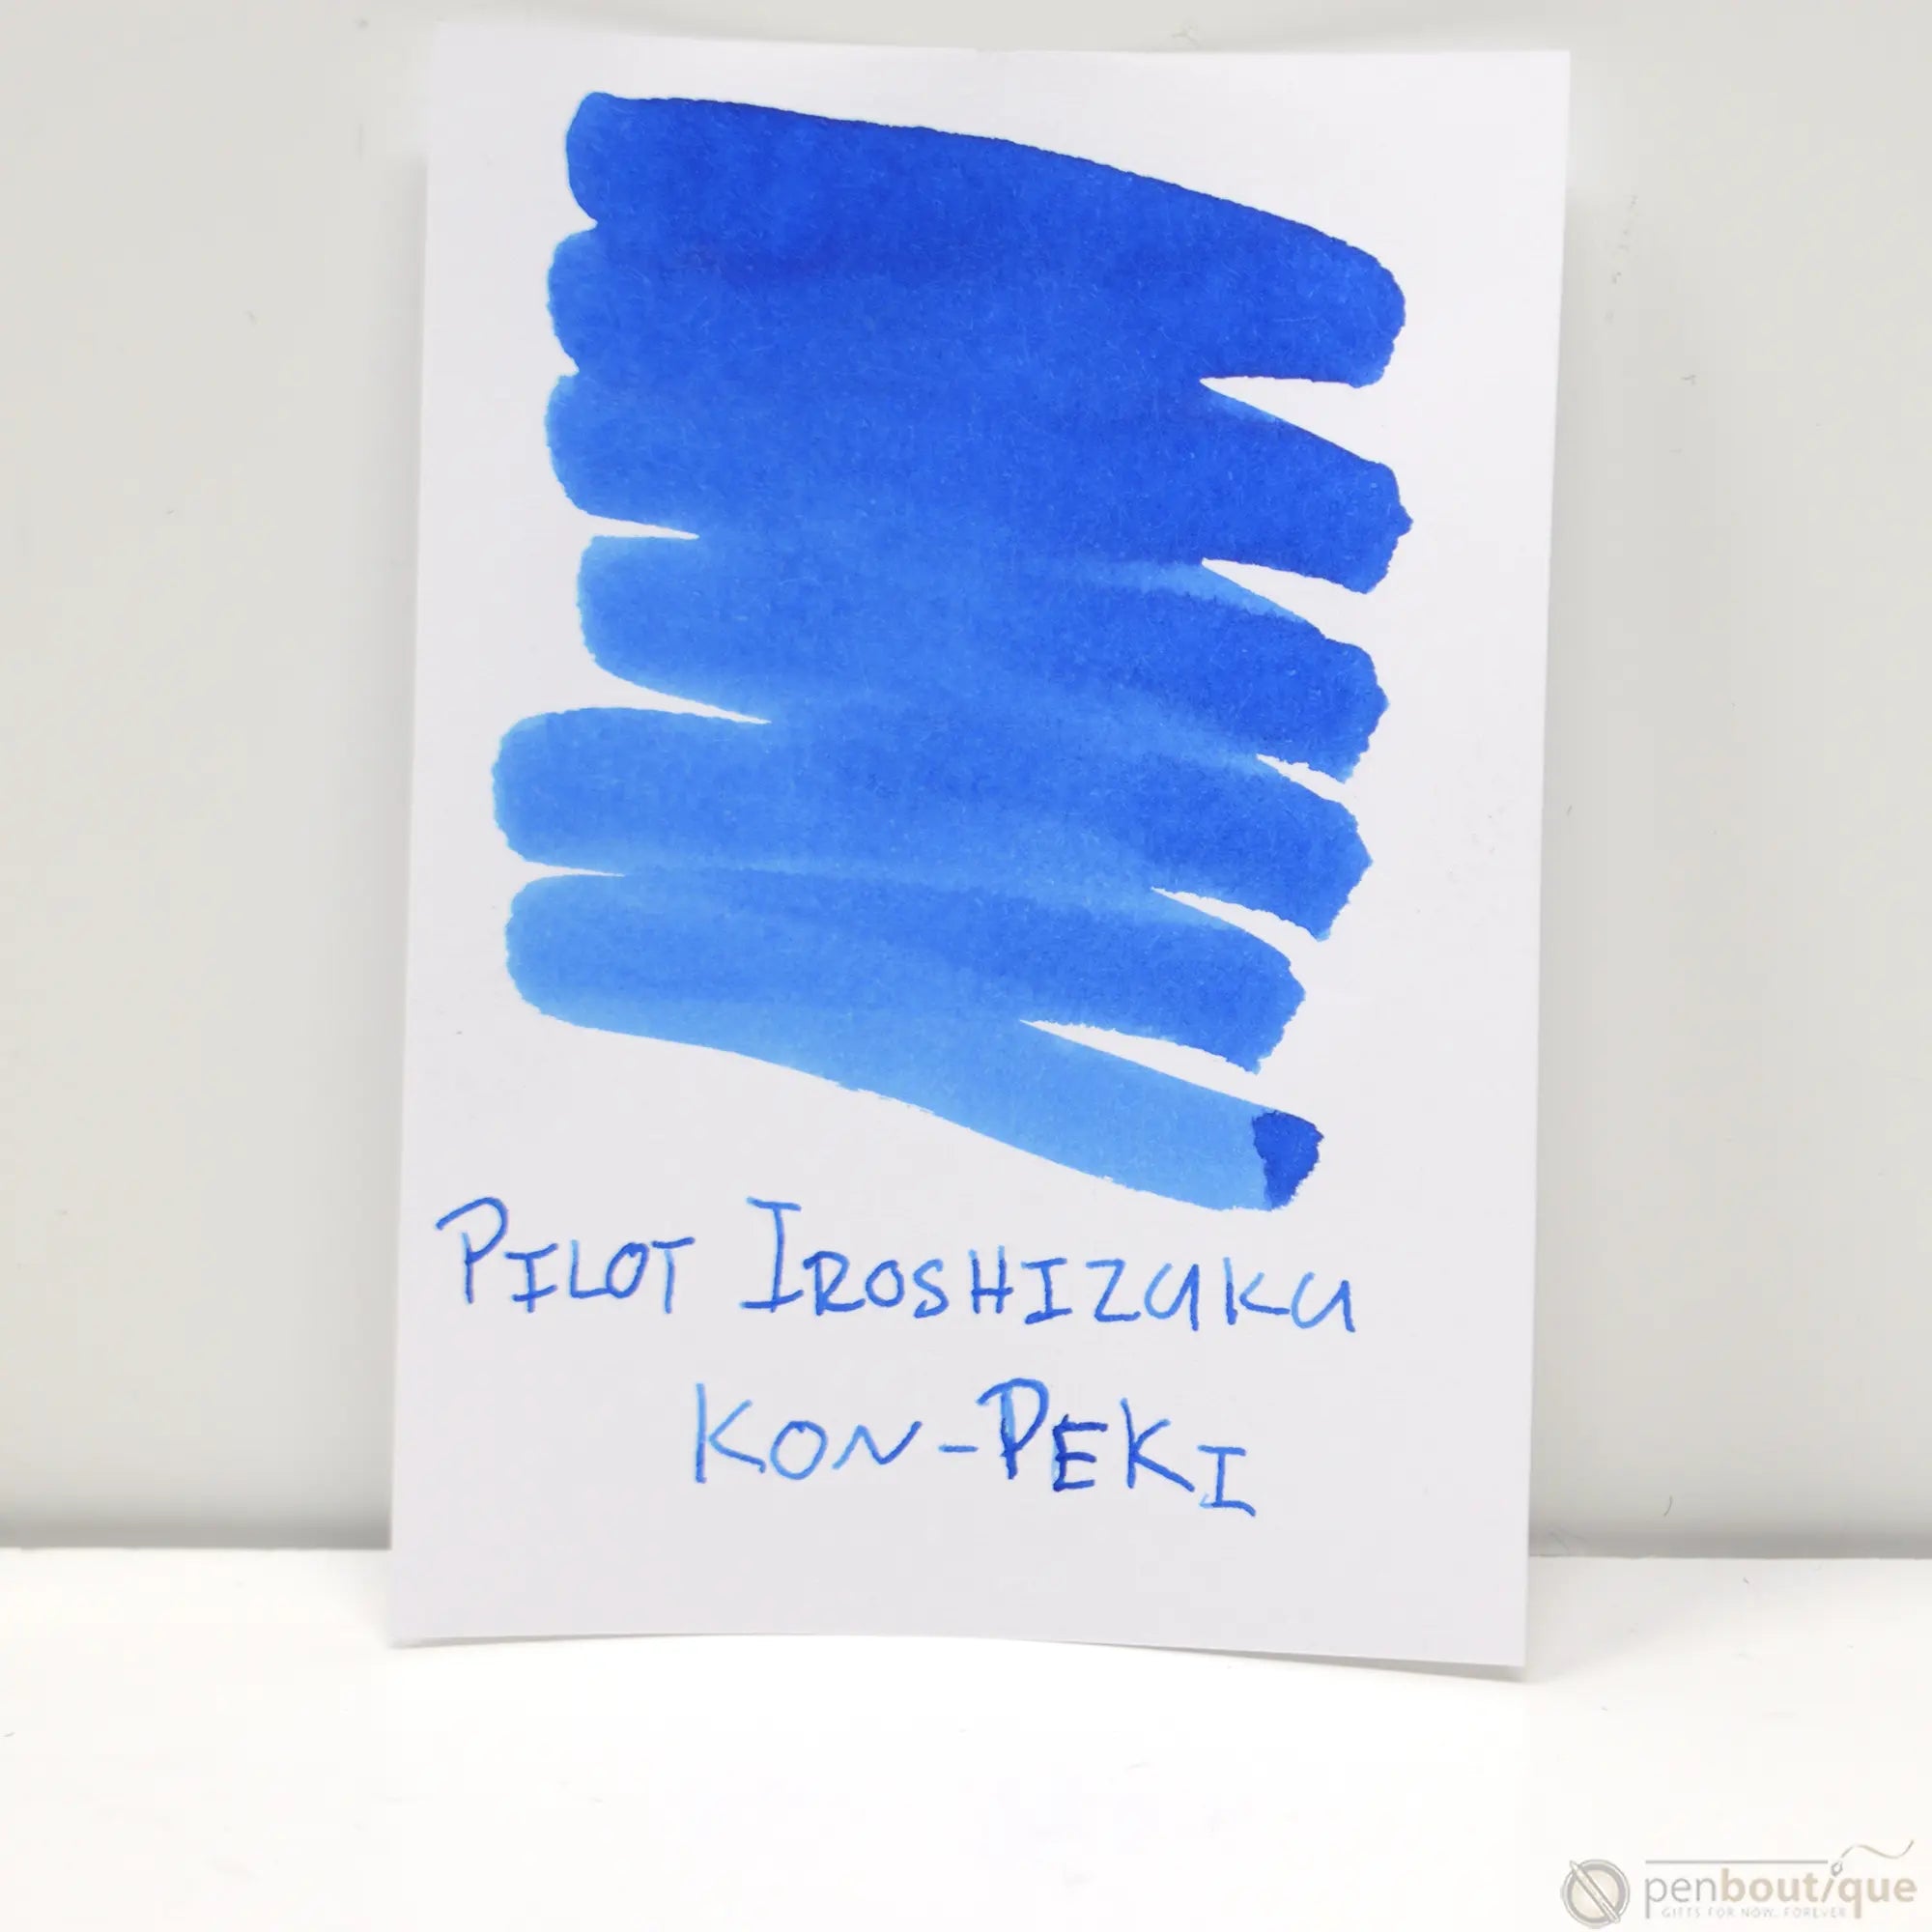 Pilot Iroshizuku Deep Cerulean Blue (Kon-peki) Fountain Pen Ink Bottle-Pen Boutique Ltd